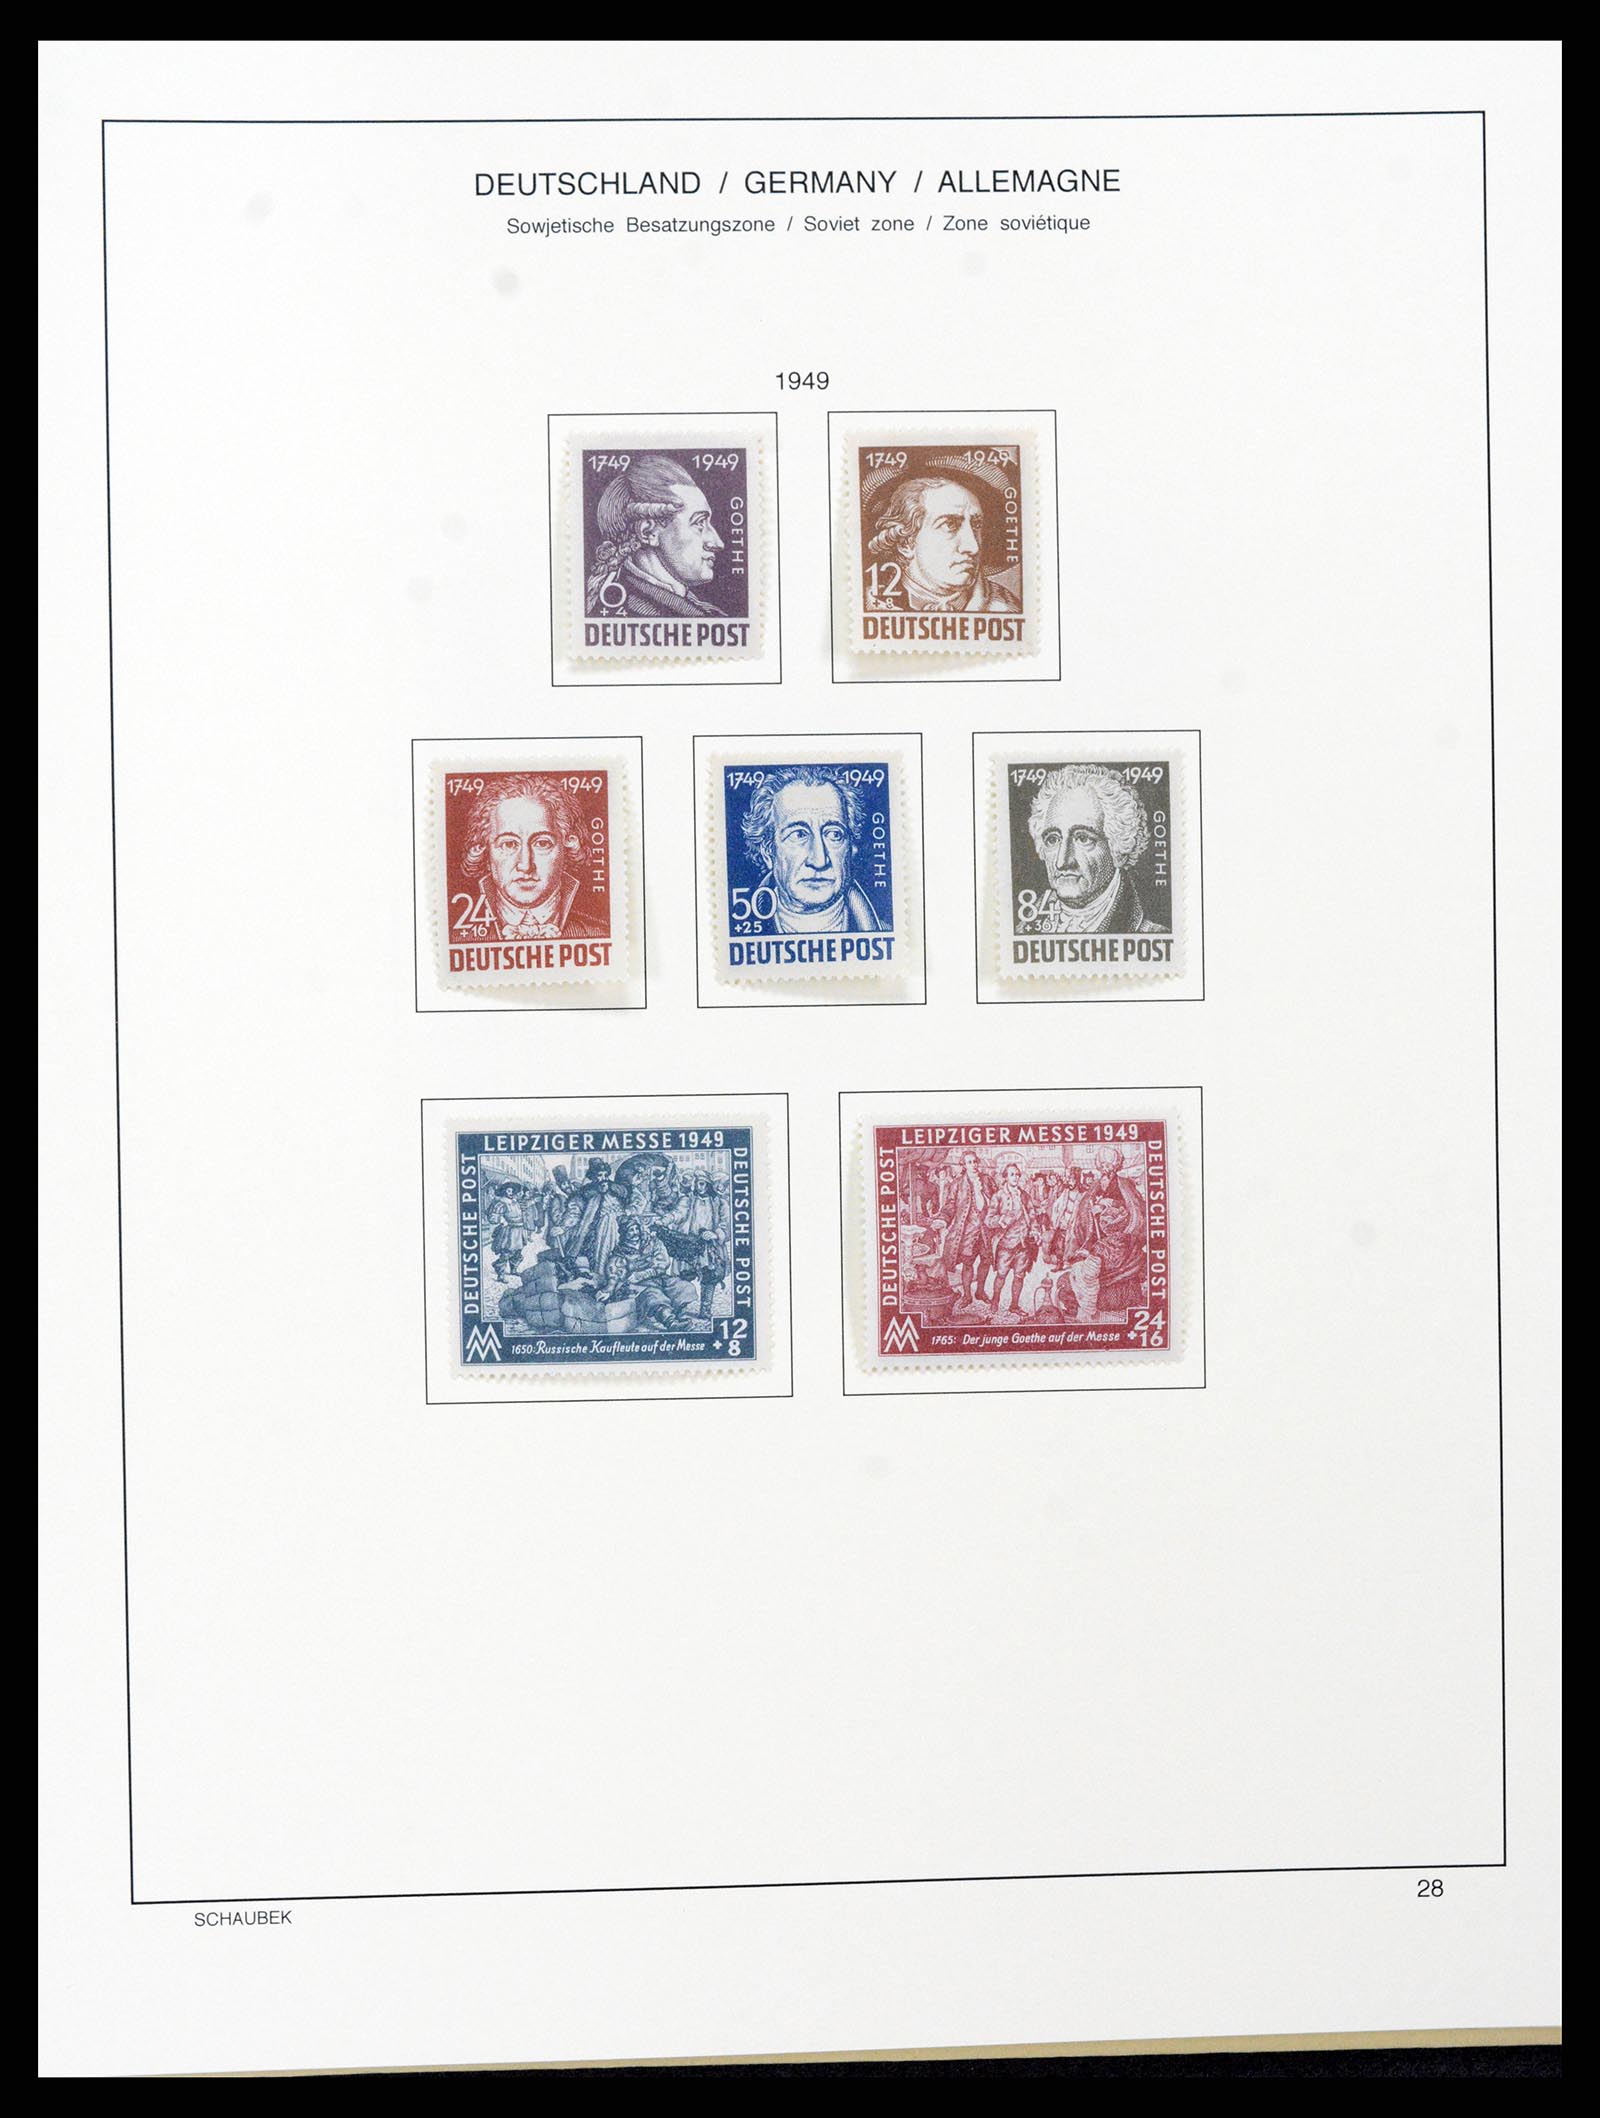 37645 055 - Stamp collection 37645 German Zones 1945-1949.